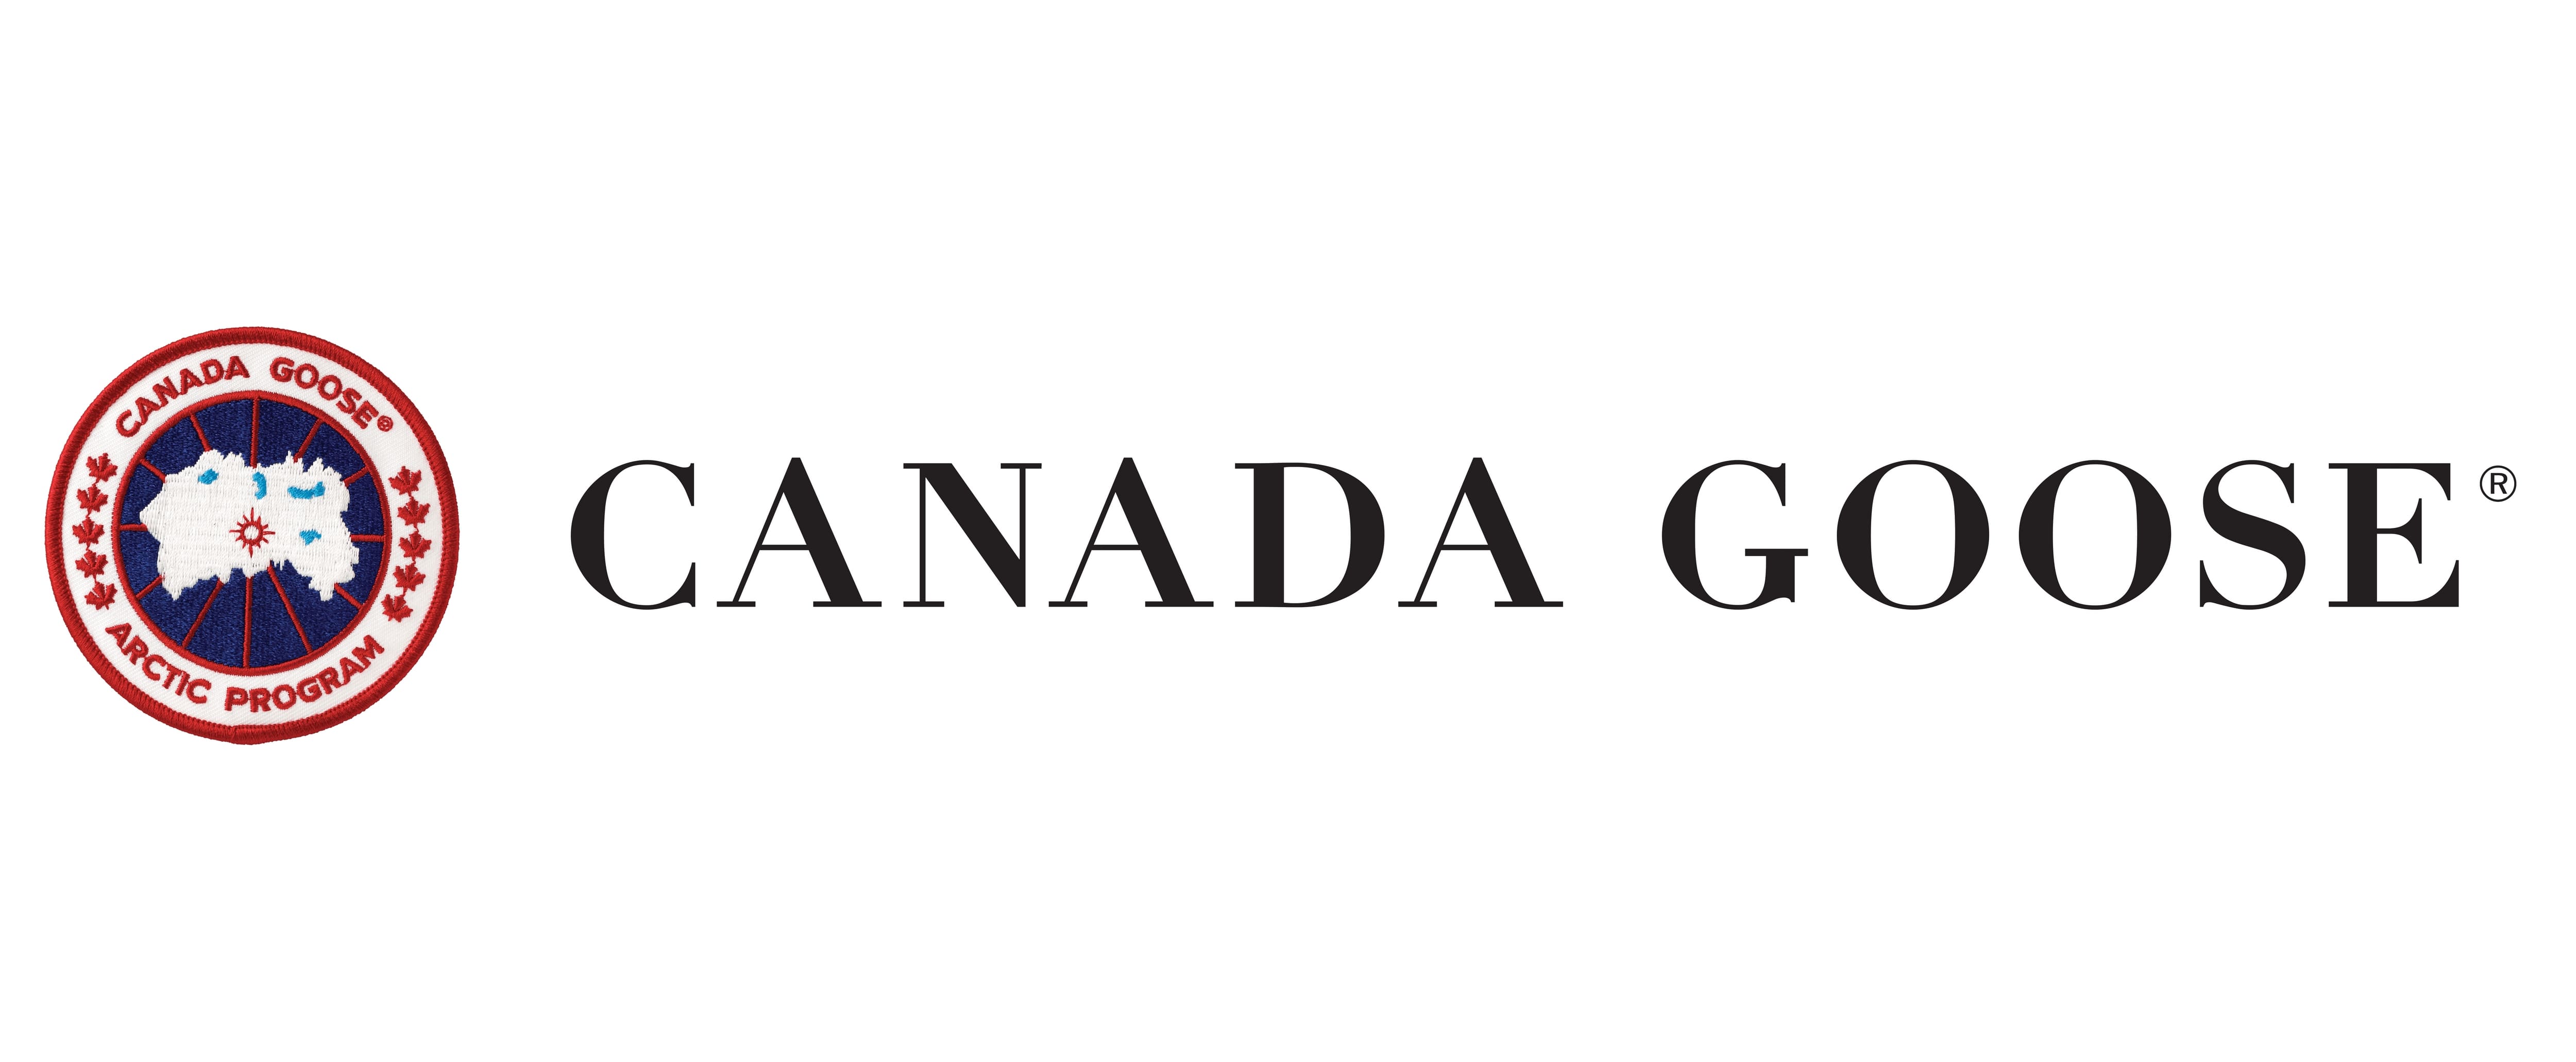 Canada Goose jackets: the status symbol, explained - Vox